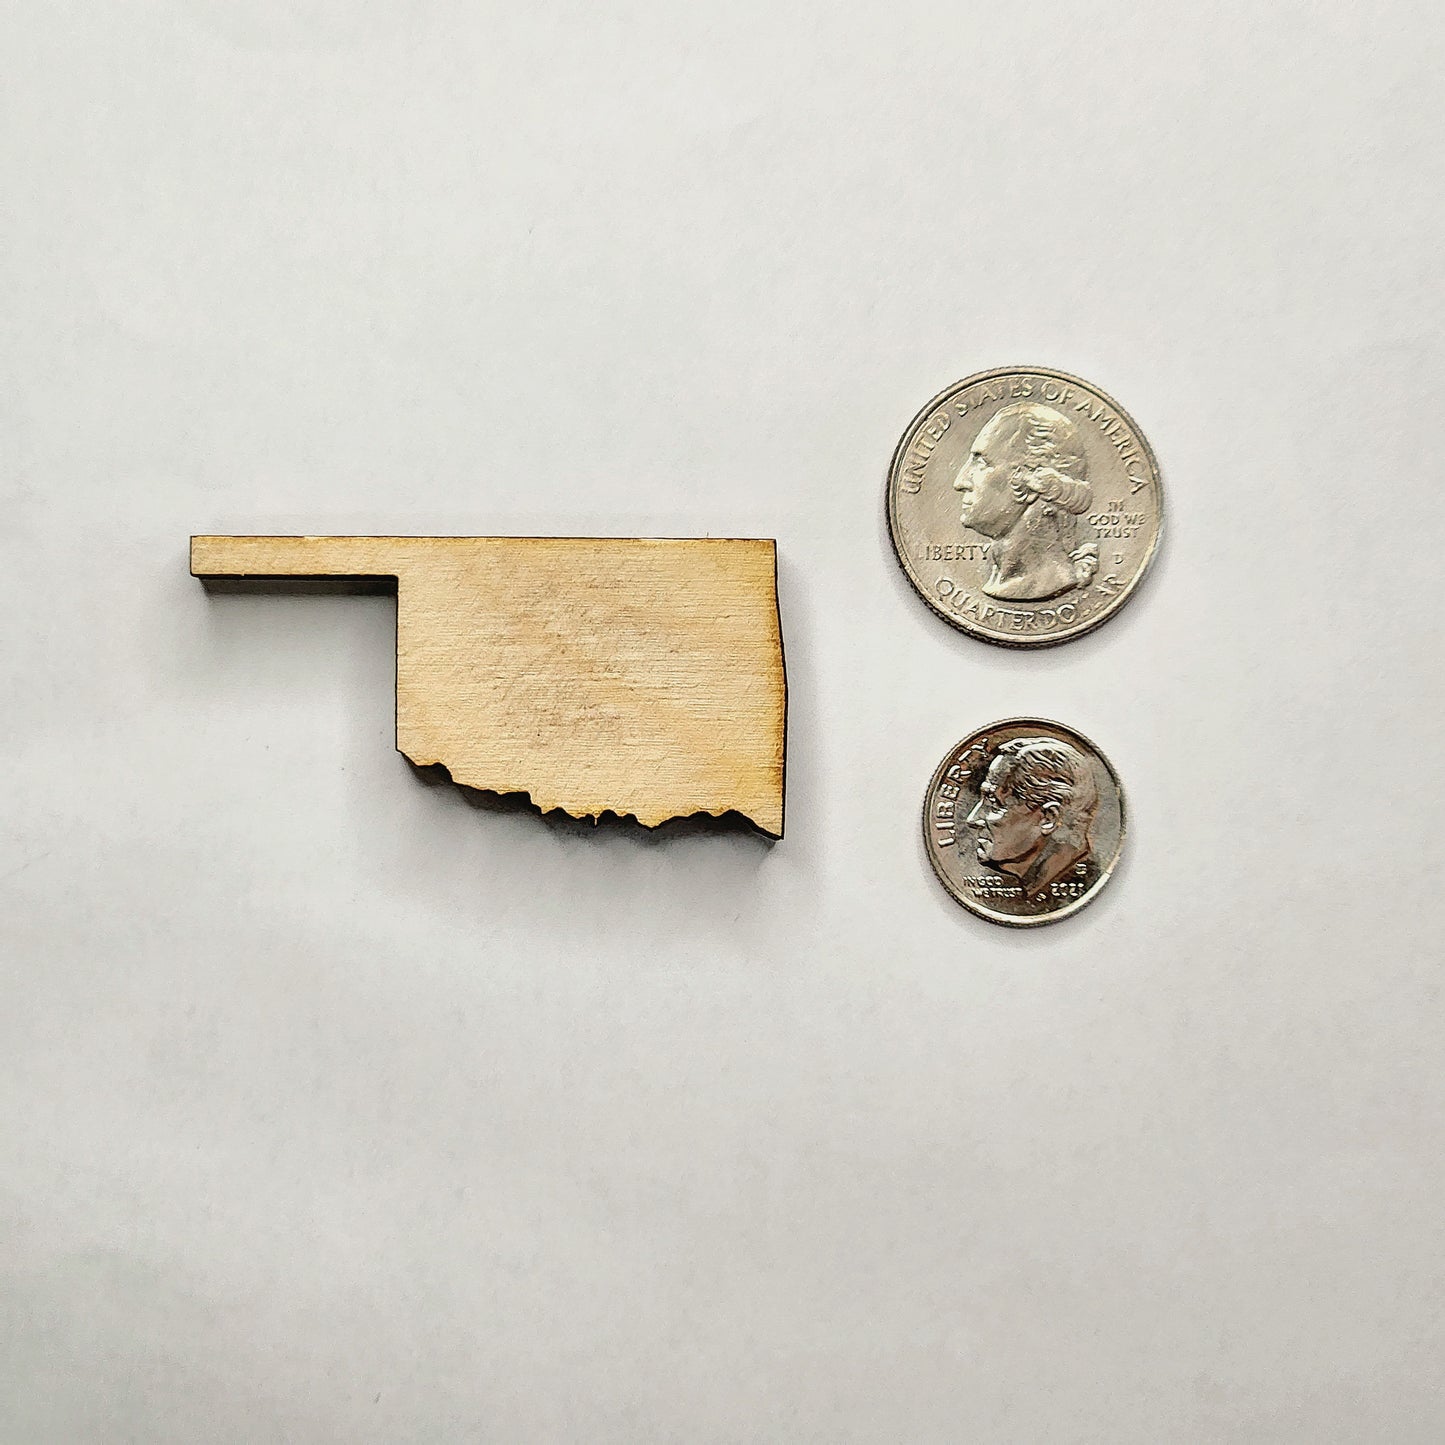 Oklahoma Wooden Magnet